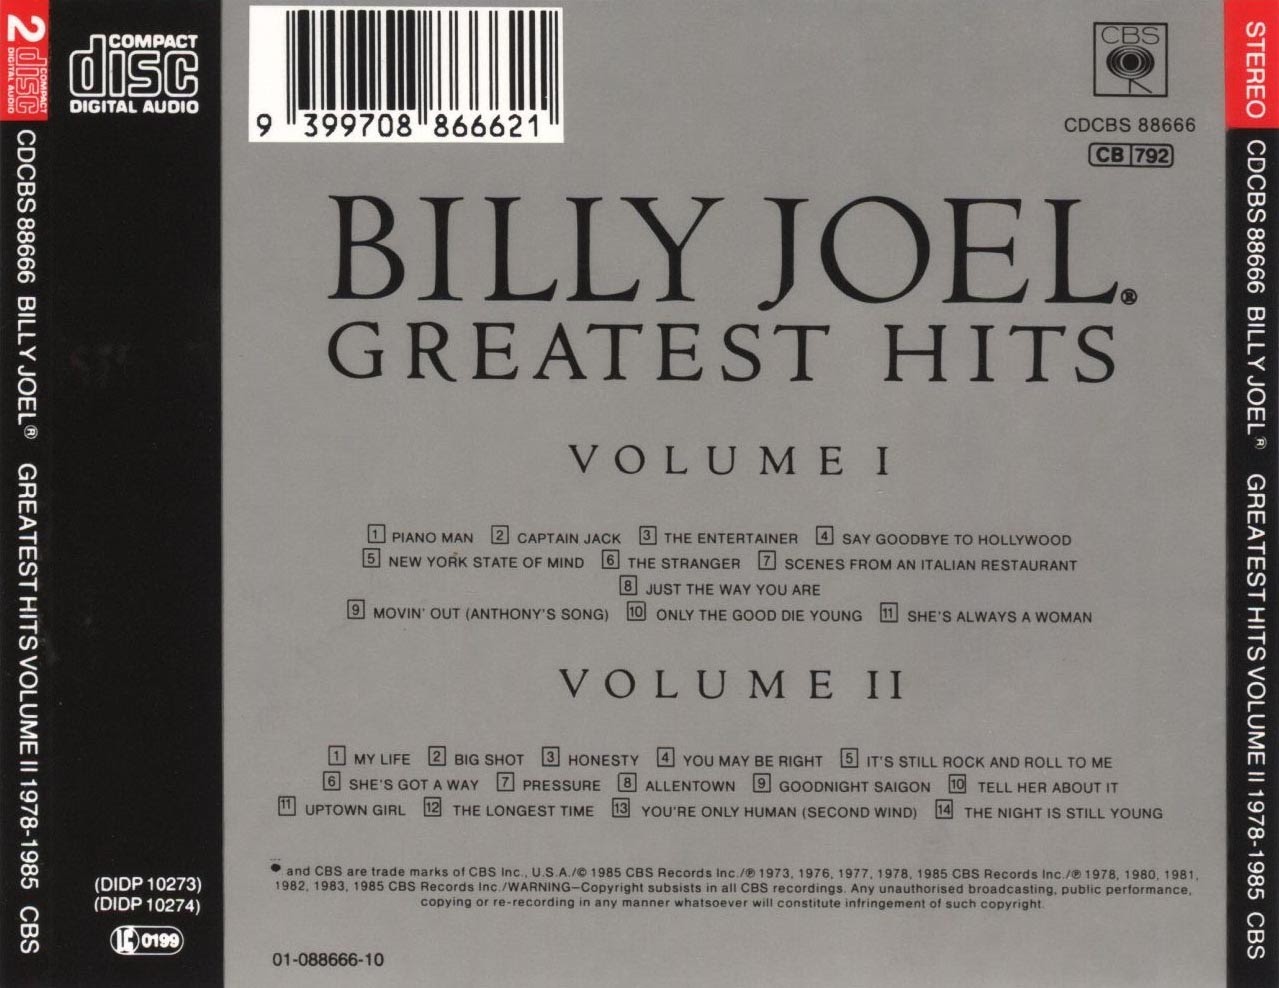 Billy Joel Discography Mp3 Torrent Download